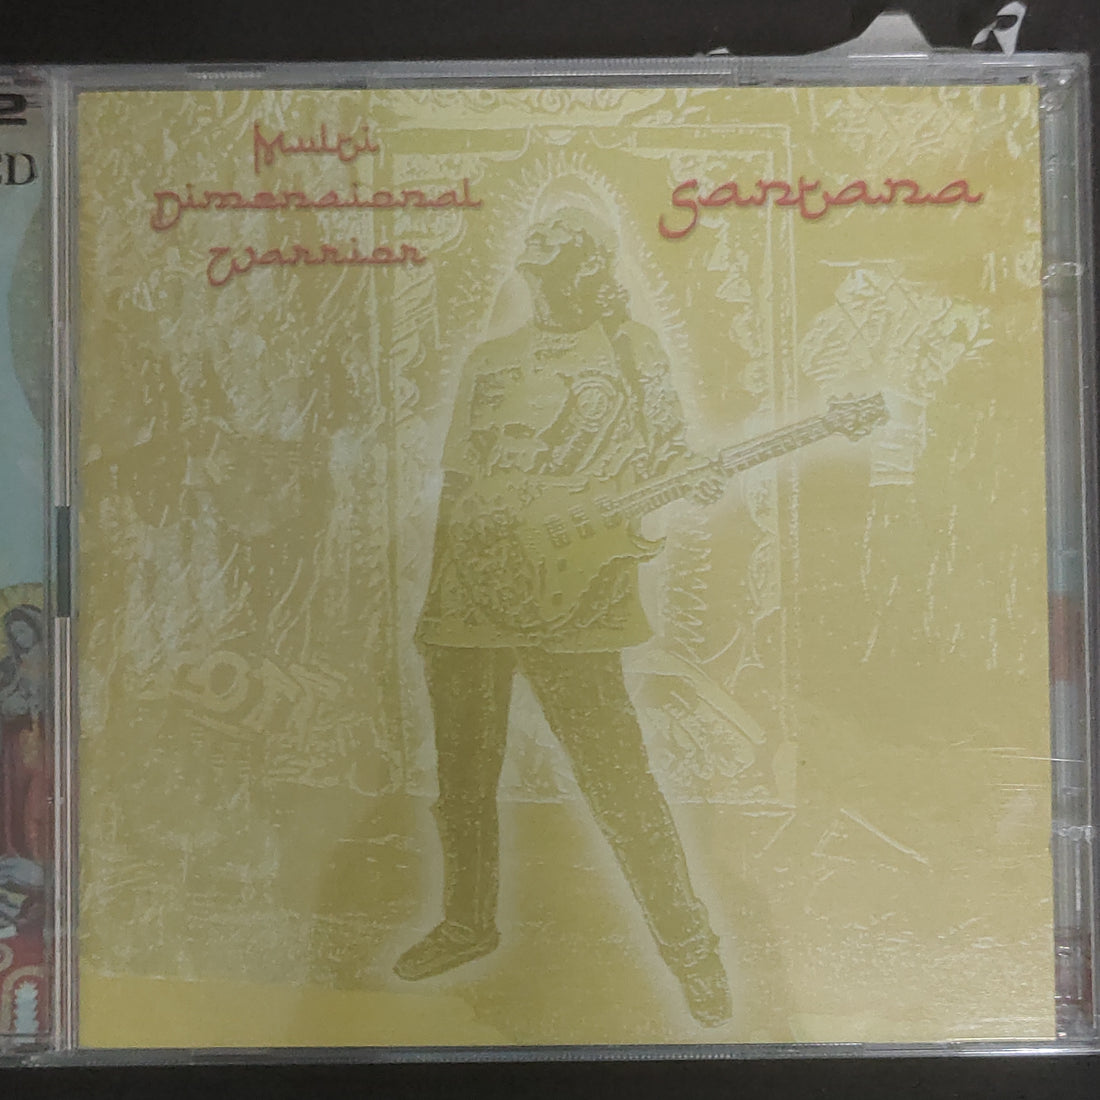 Santana - Multi Dimensional Warrior (CD) (VG+)